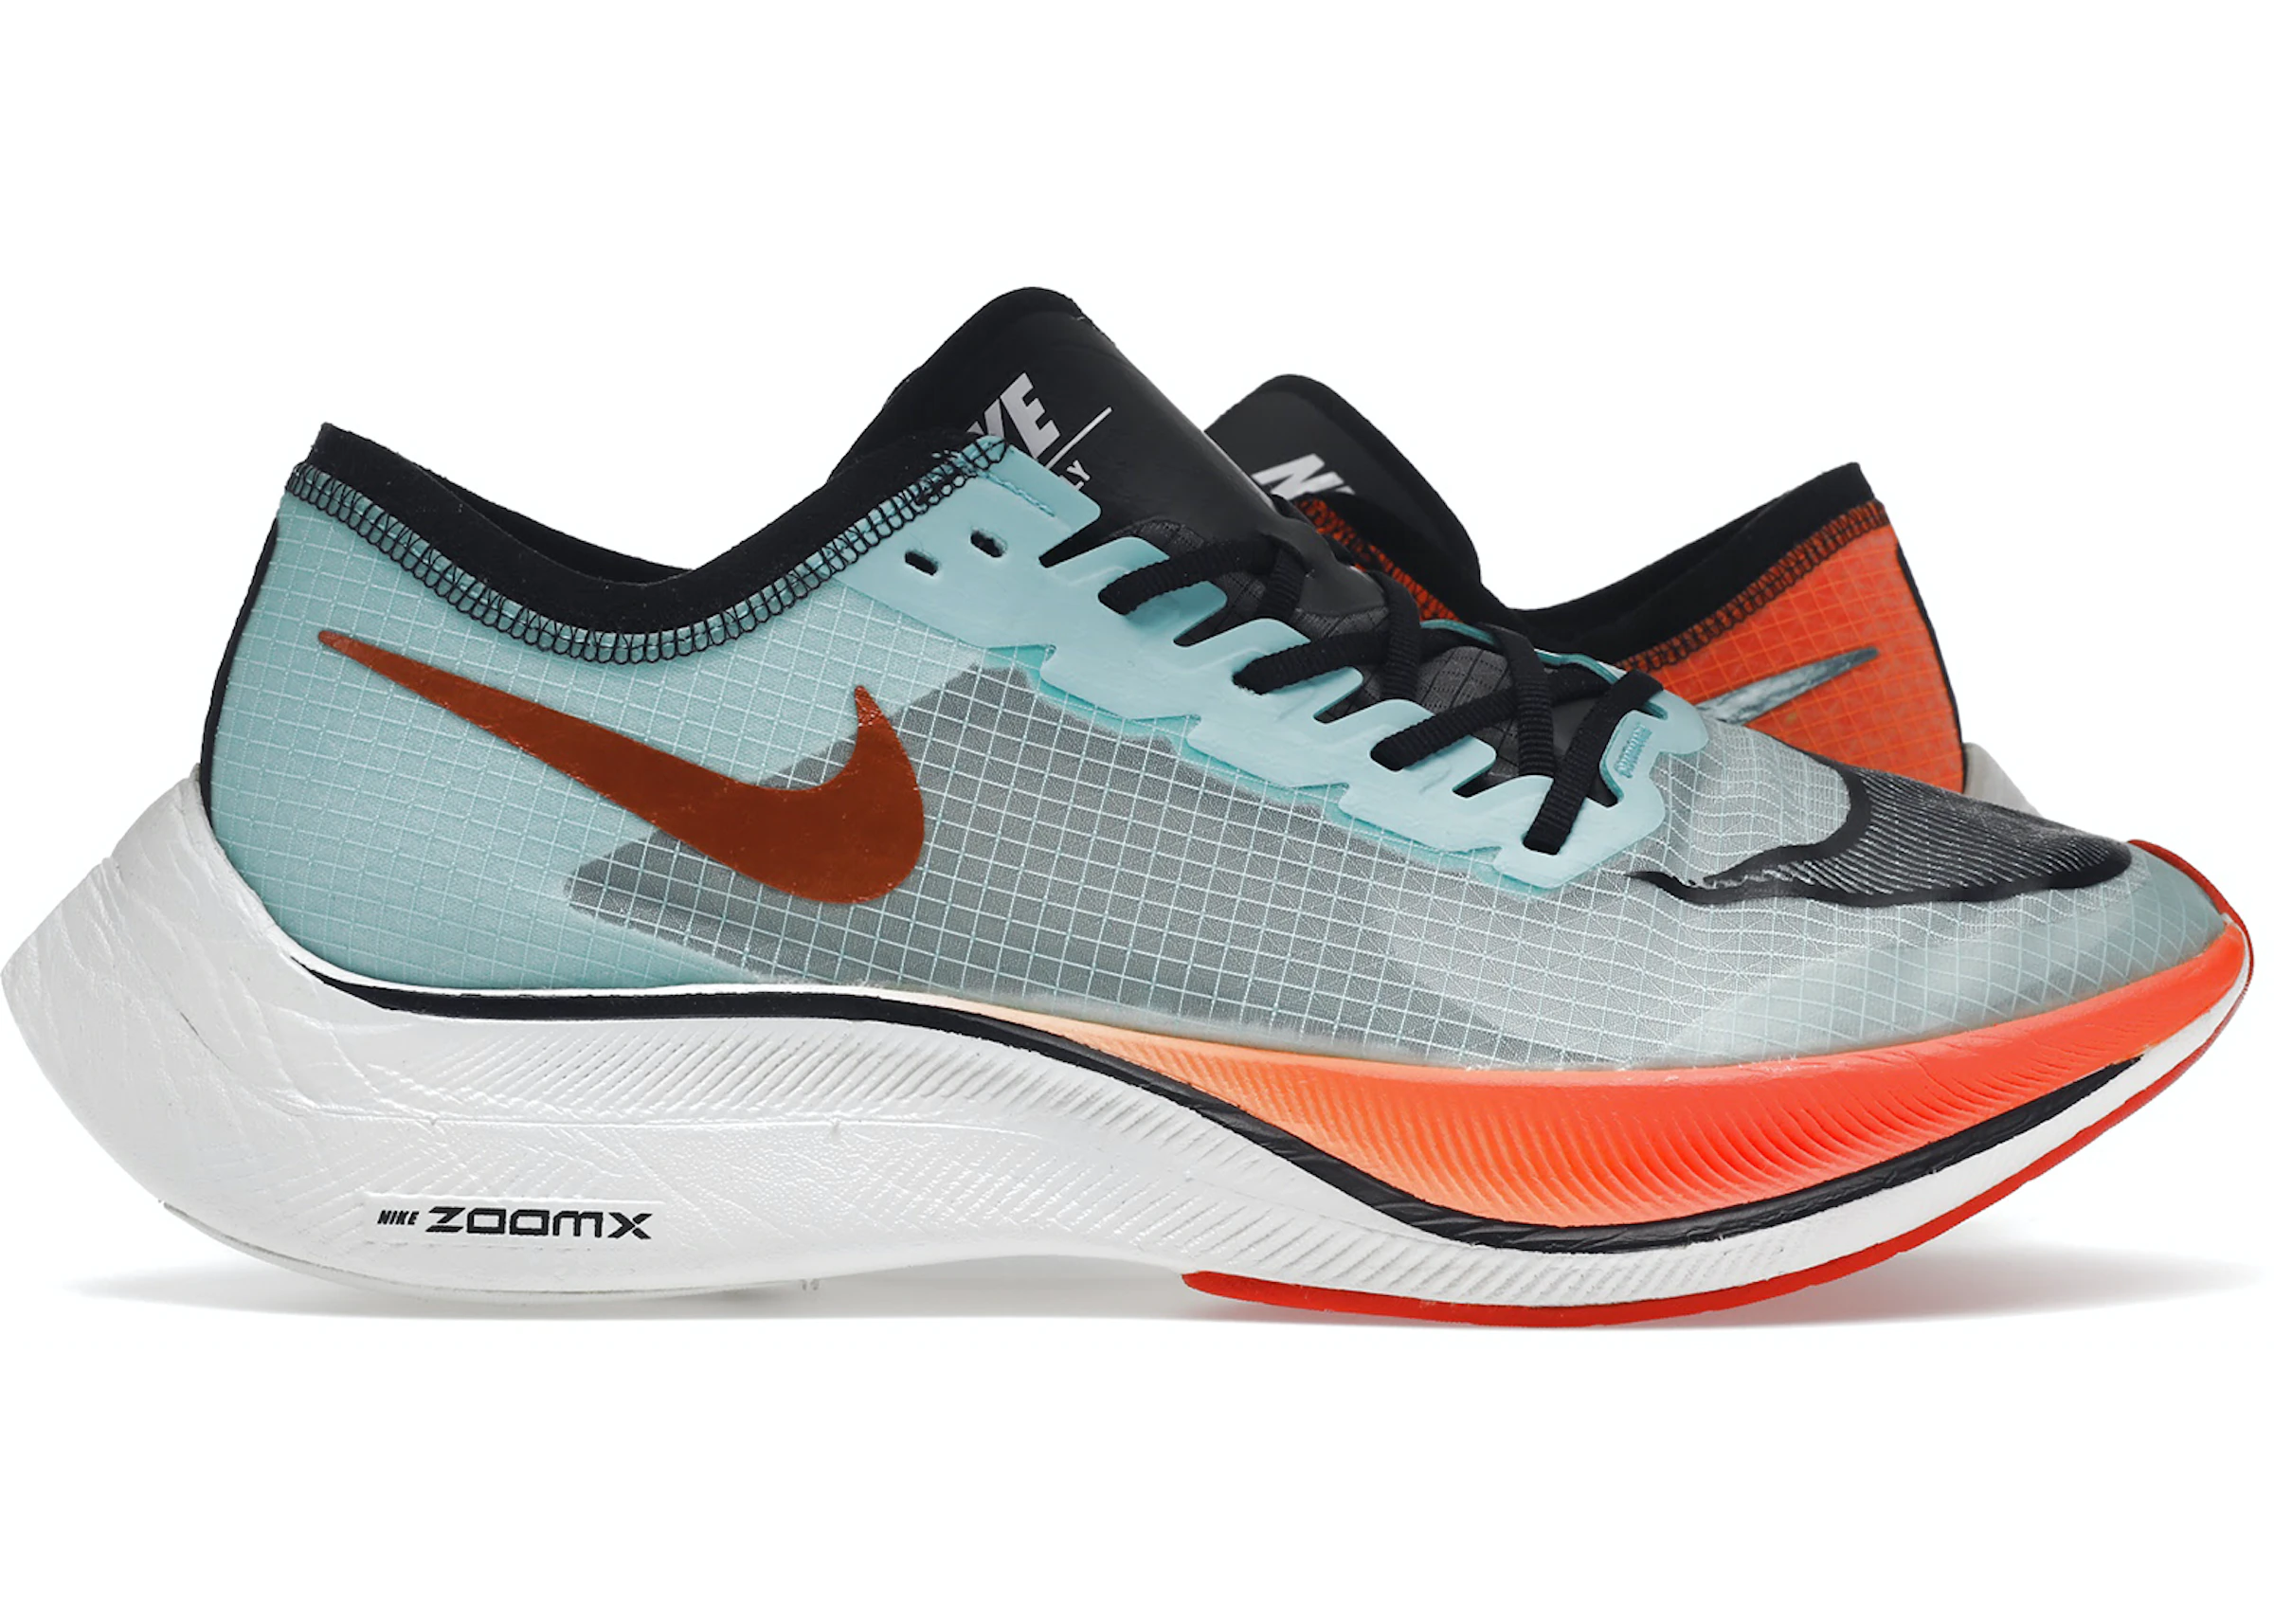 Nike ZoomX zoom vaporfly Vaporfly Next% Ekiden - CD4553-300 - US